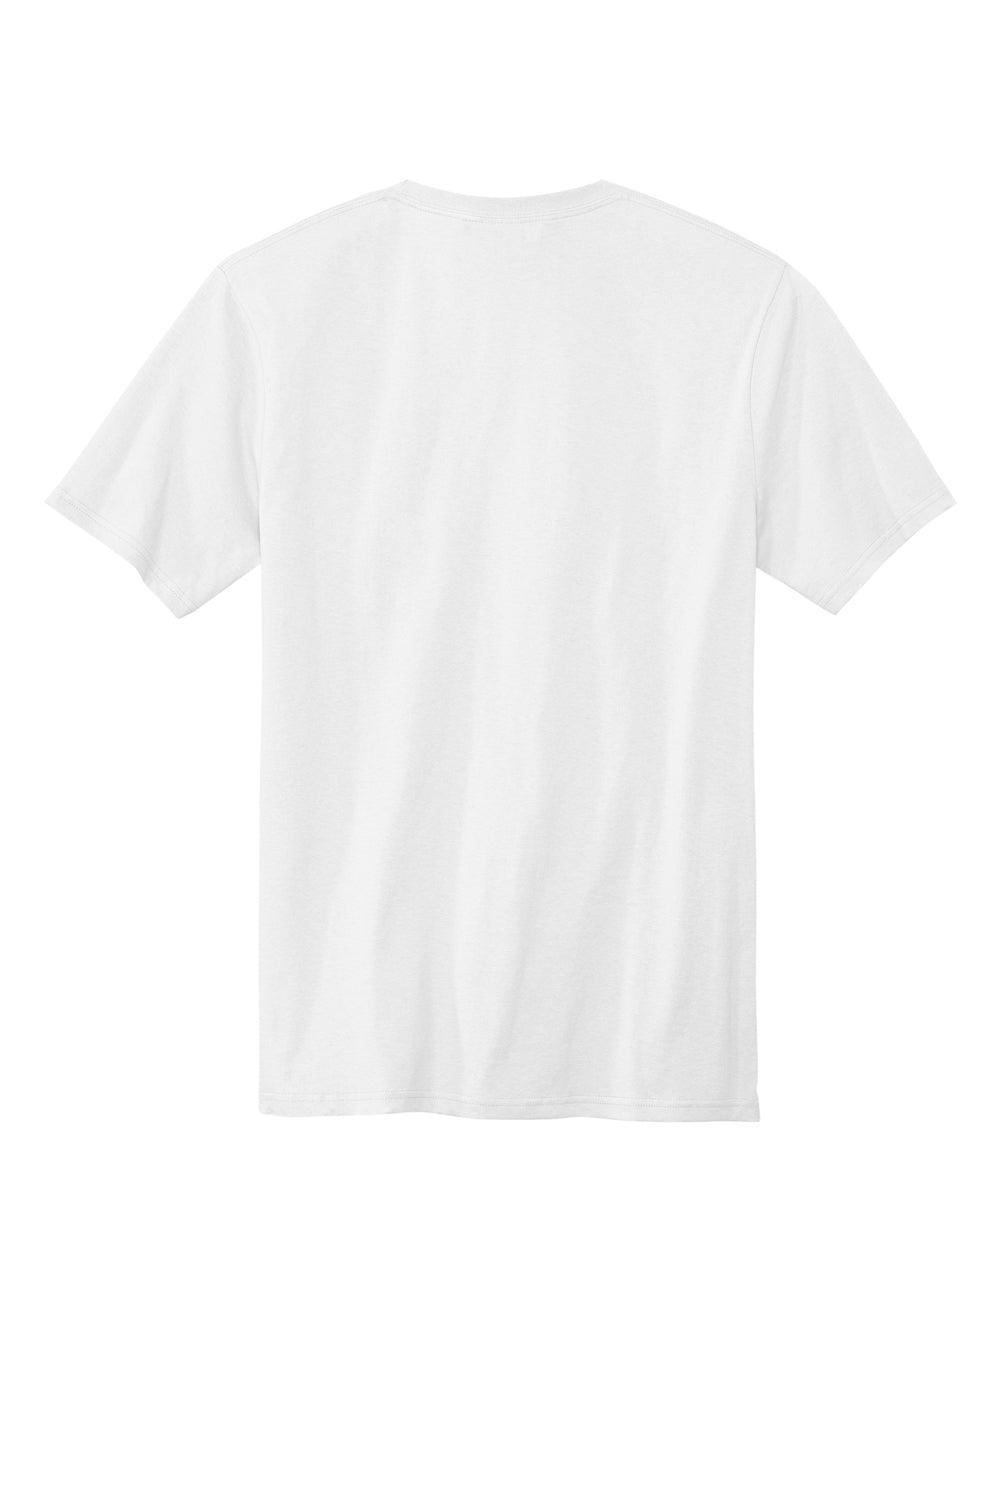 Volunteer Knitwear VL100P USA Made All American Short Sleeve Crewneck T-Shirt w/ Pocket White Flat Back